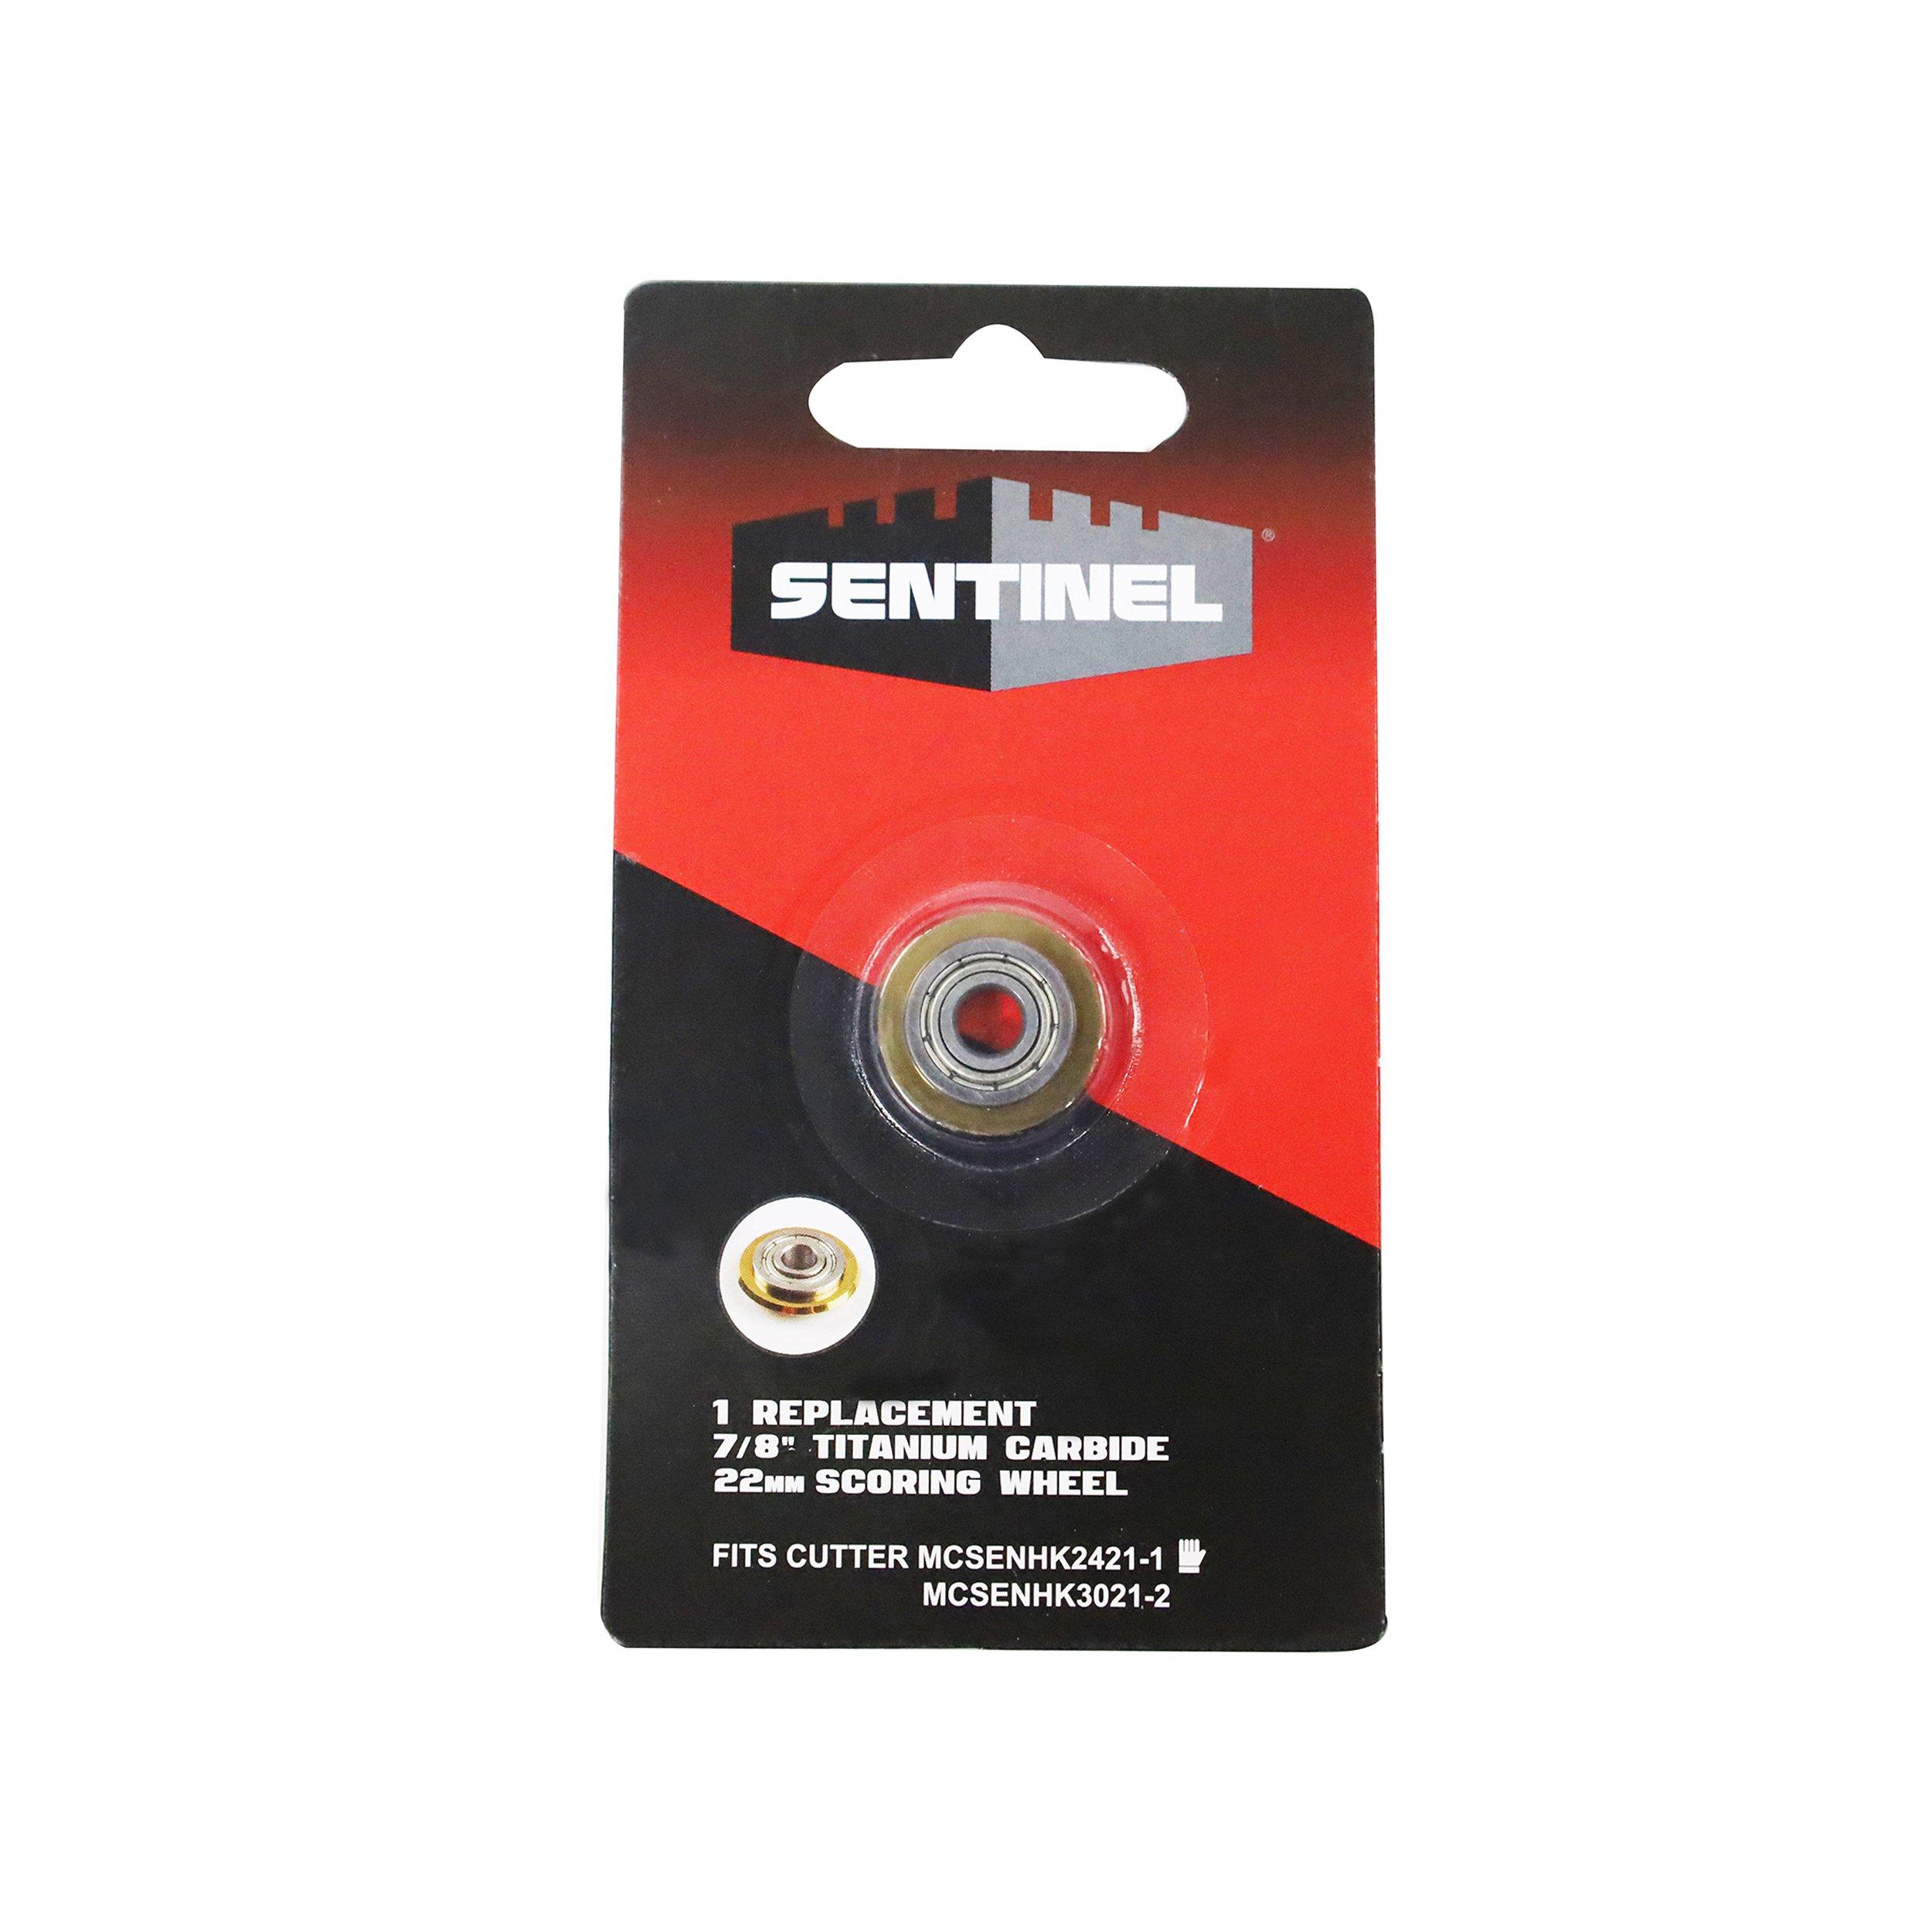 Sentinel 22mm Slim Scoring Wheel